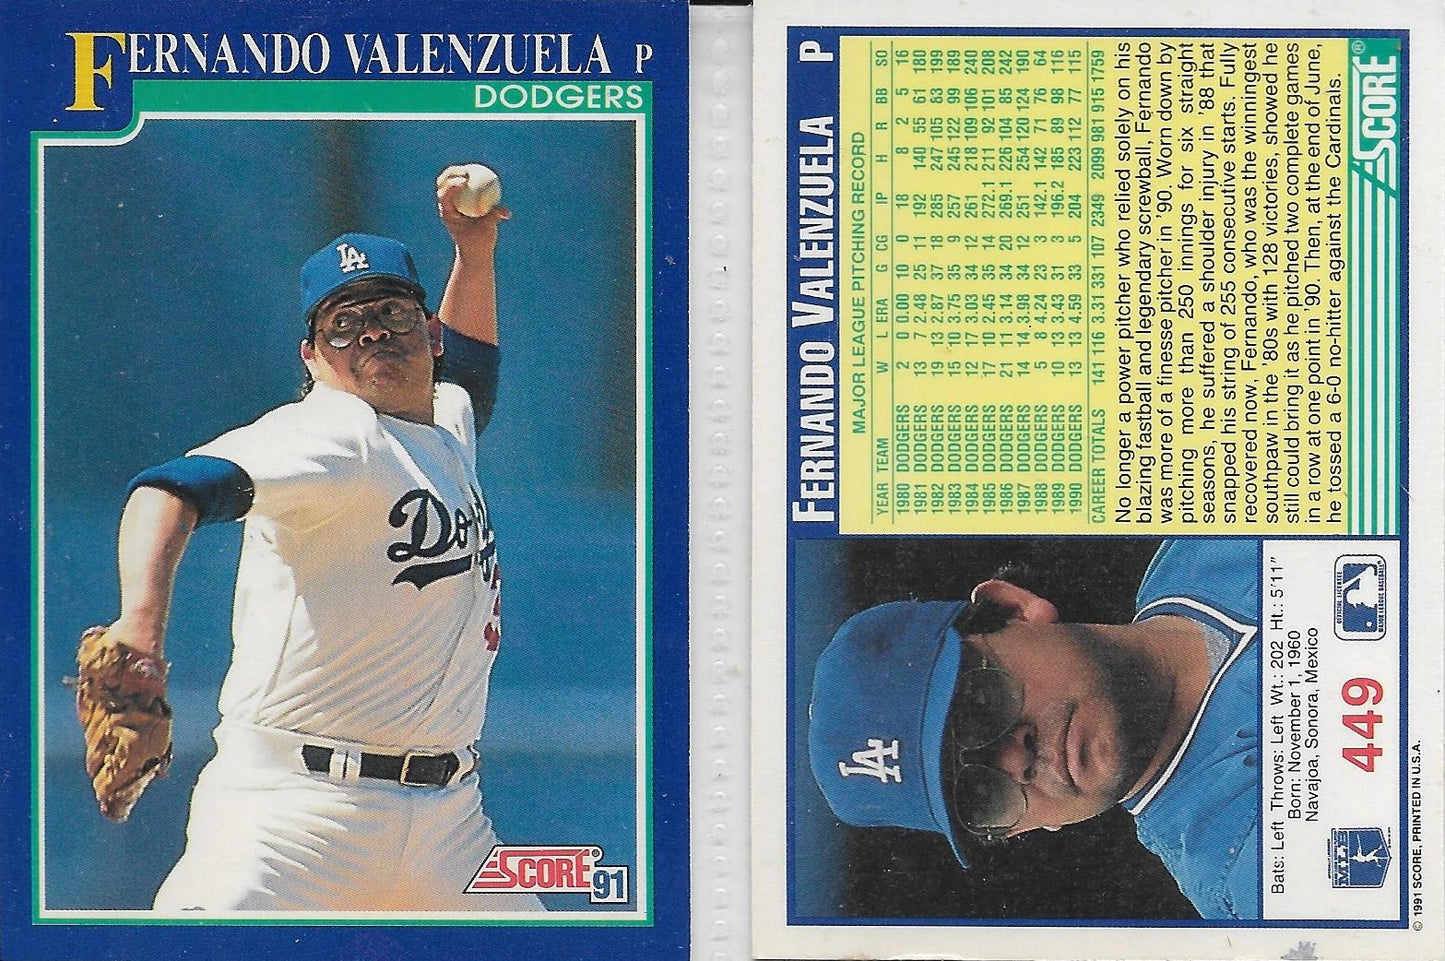 1991 SCORE #449 - FERNANDO VALENZUELA - LOS ANGELES DODGERS